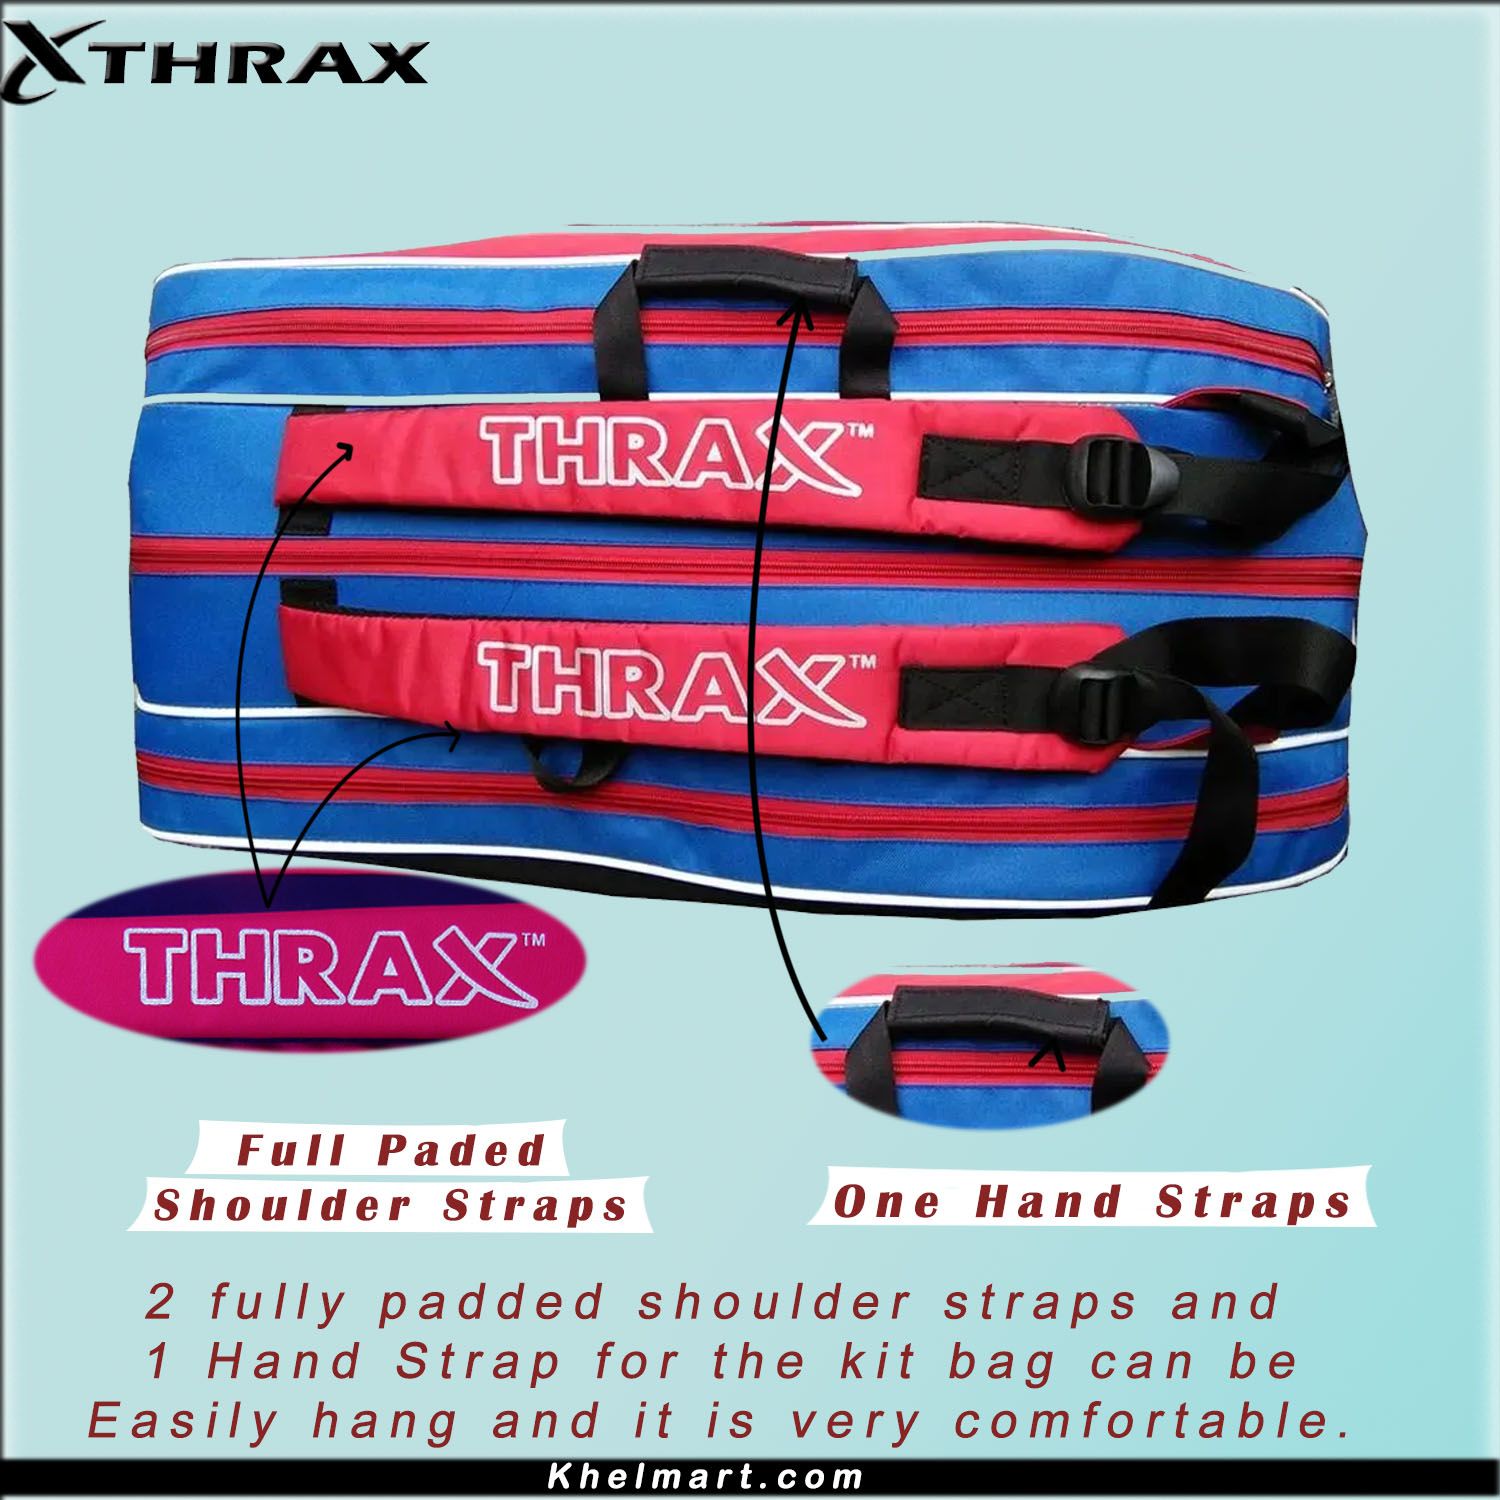 Thrax Gtx Series Badminton Kit Bag Red And Blue